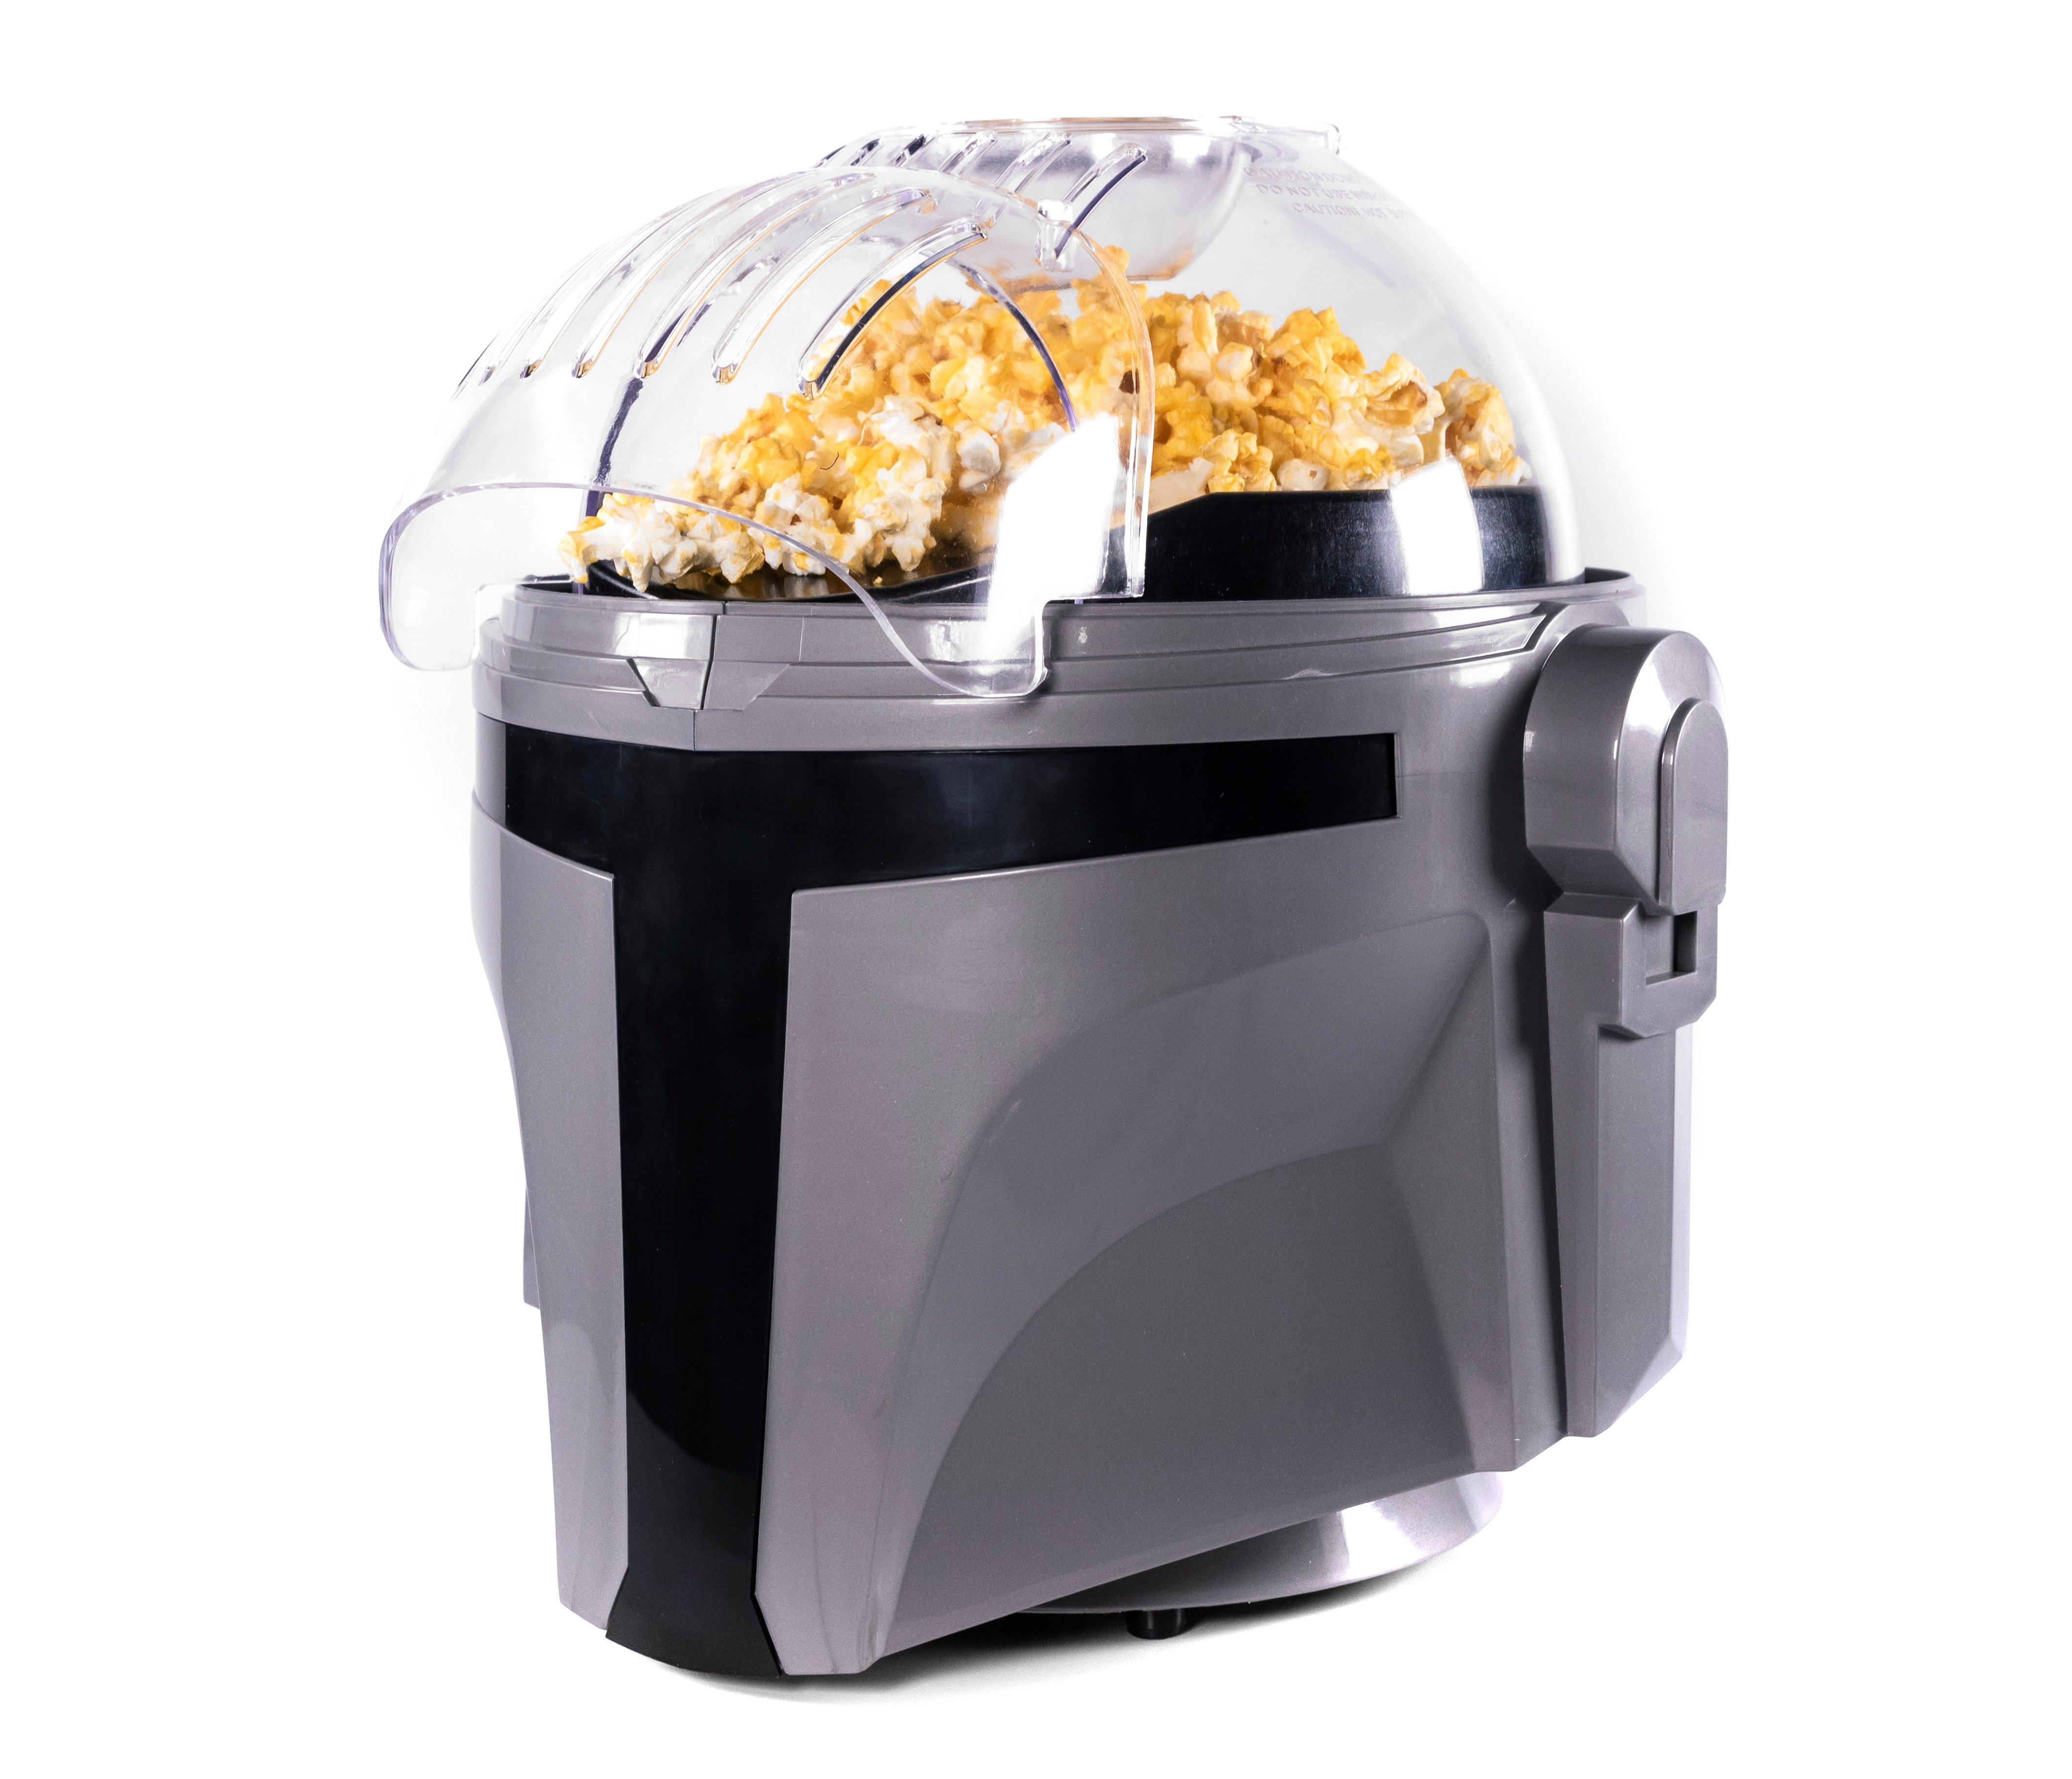 https://media.gamestop.com/i/gamestop/11116382_ALT01/Star-Wars-The-Mandalorian---Mandalorian-Helmet-Popcorn-Maker?$pdp$